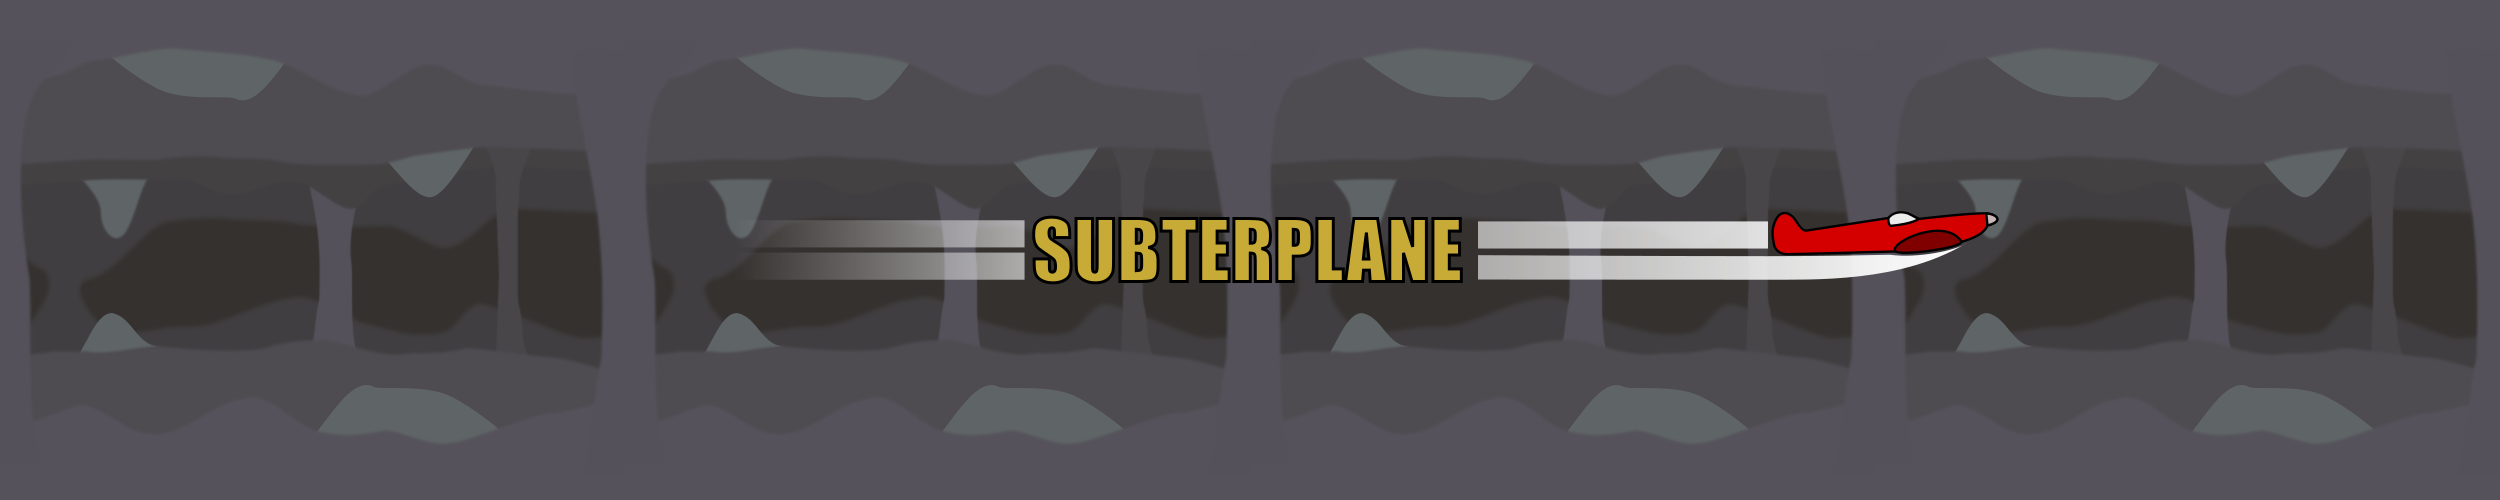 Subterplane